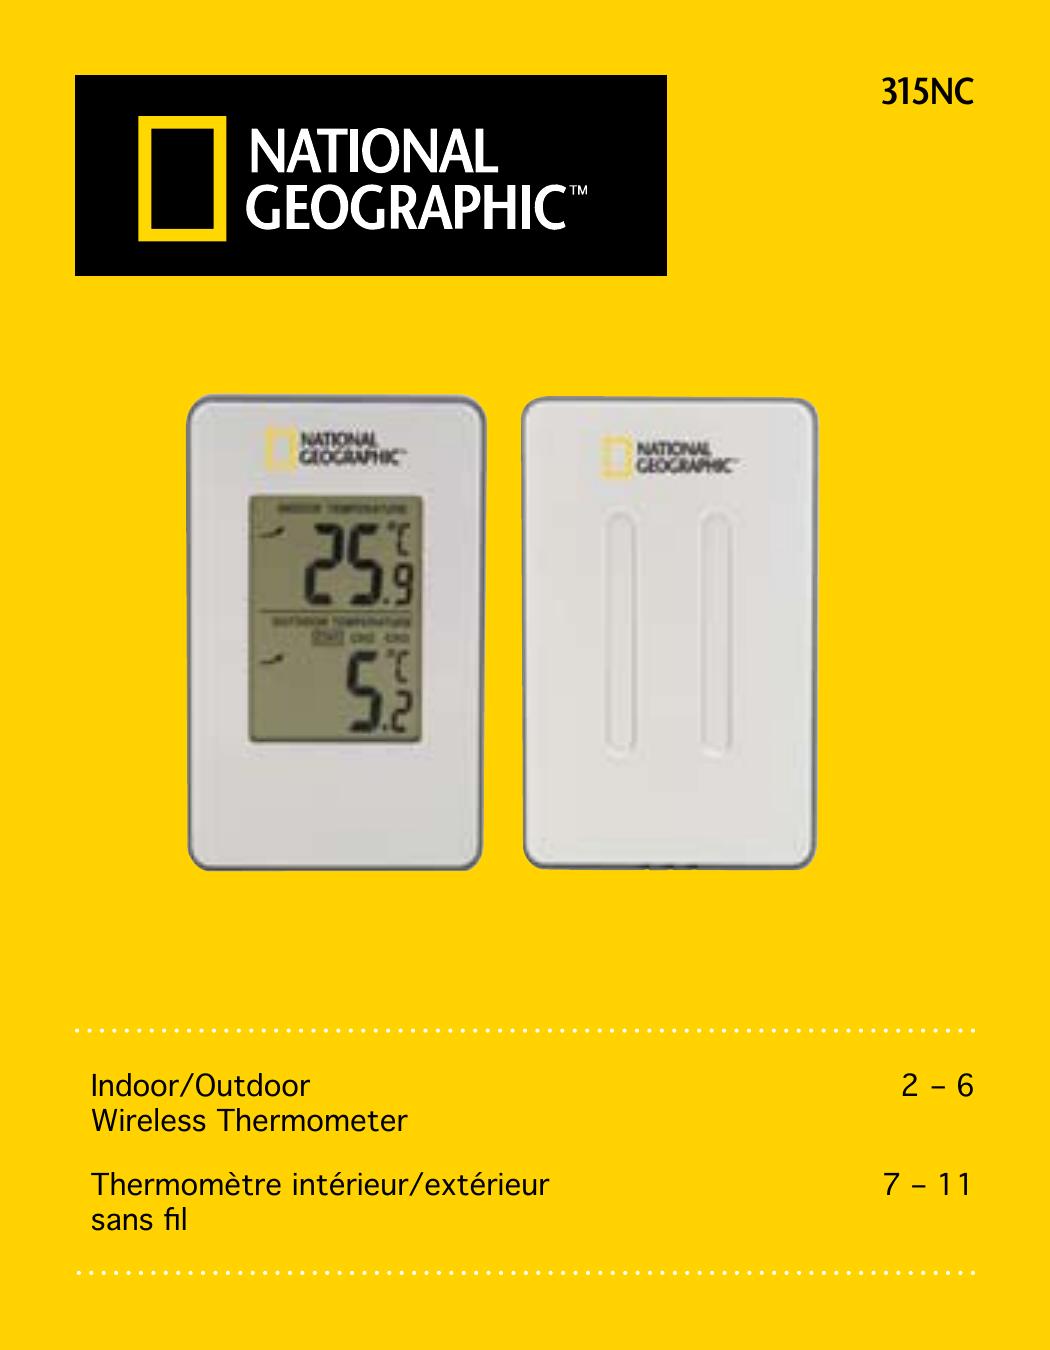 National Geographic 315NC Weather Radio User Manual